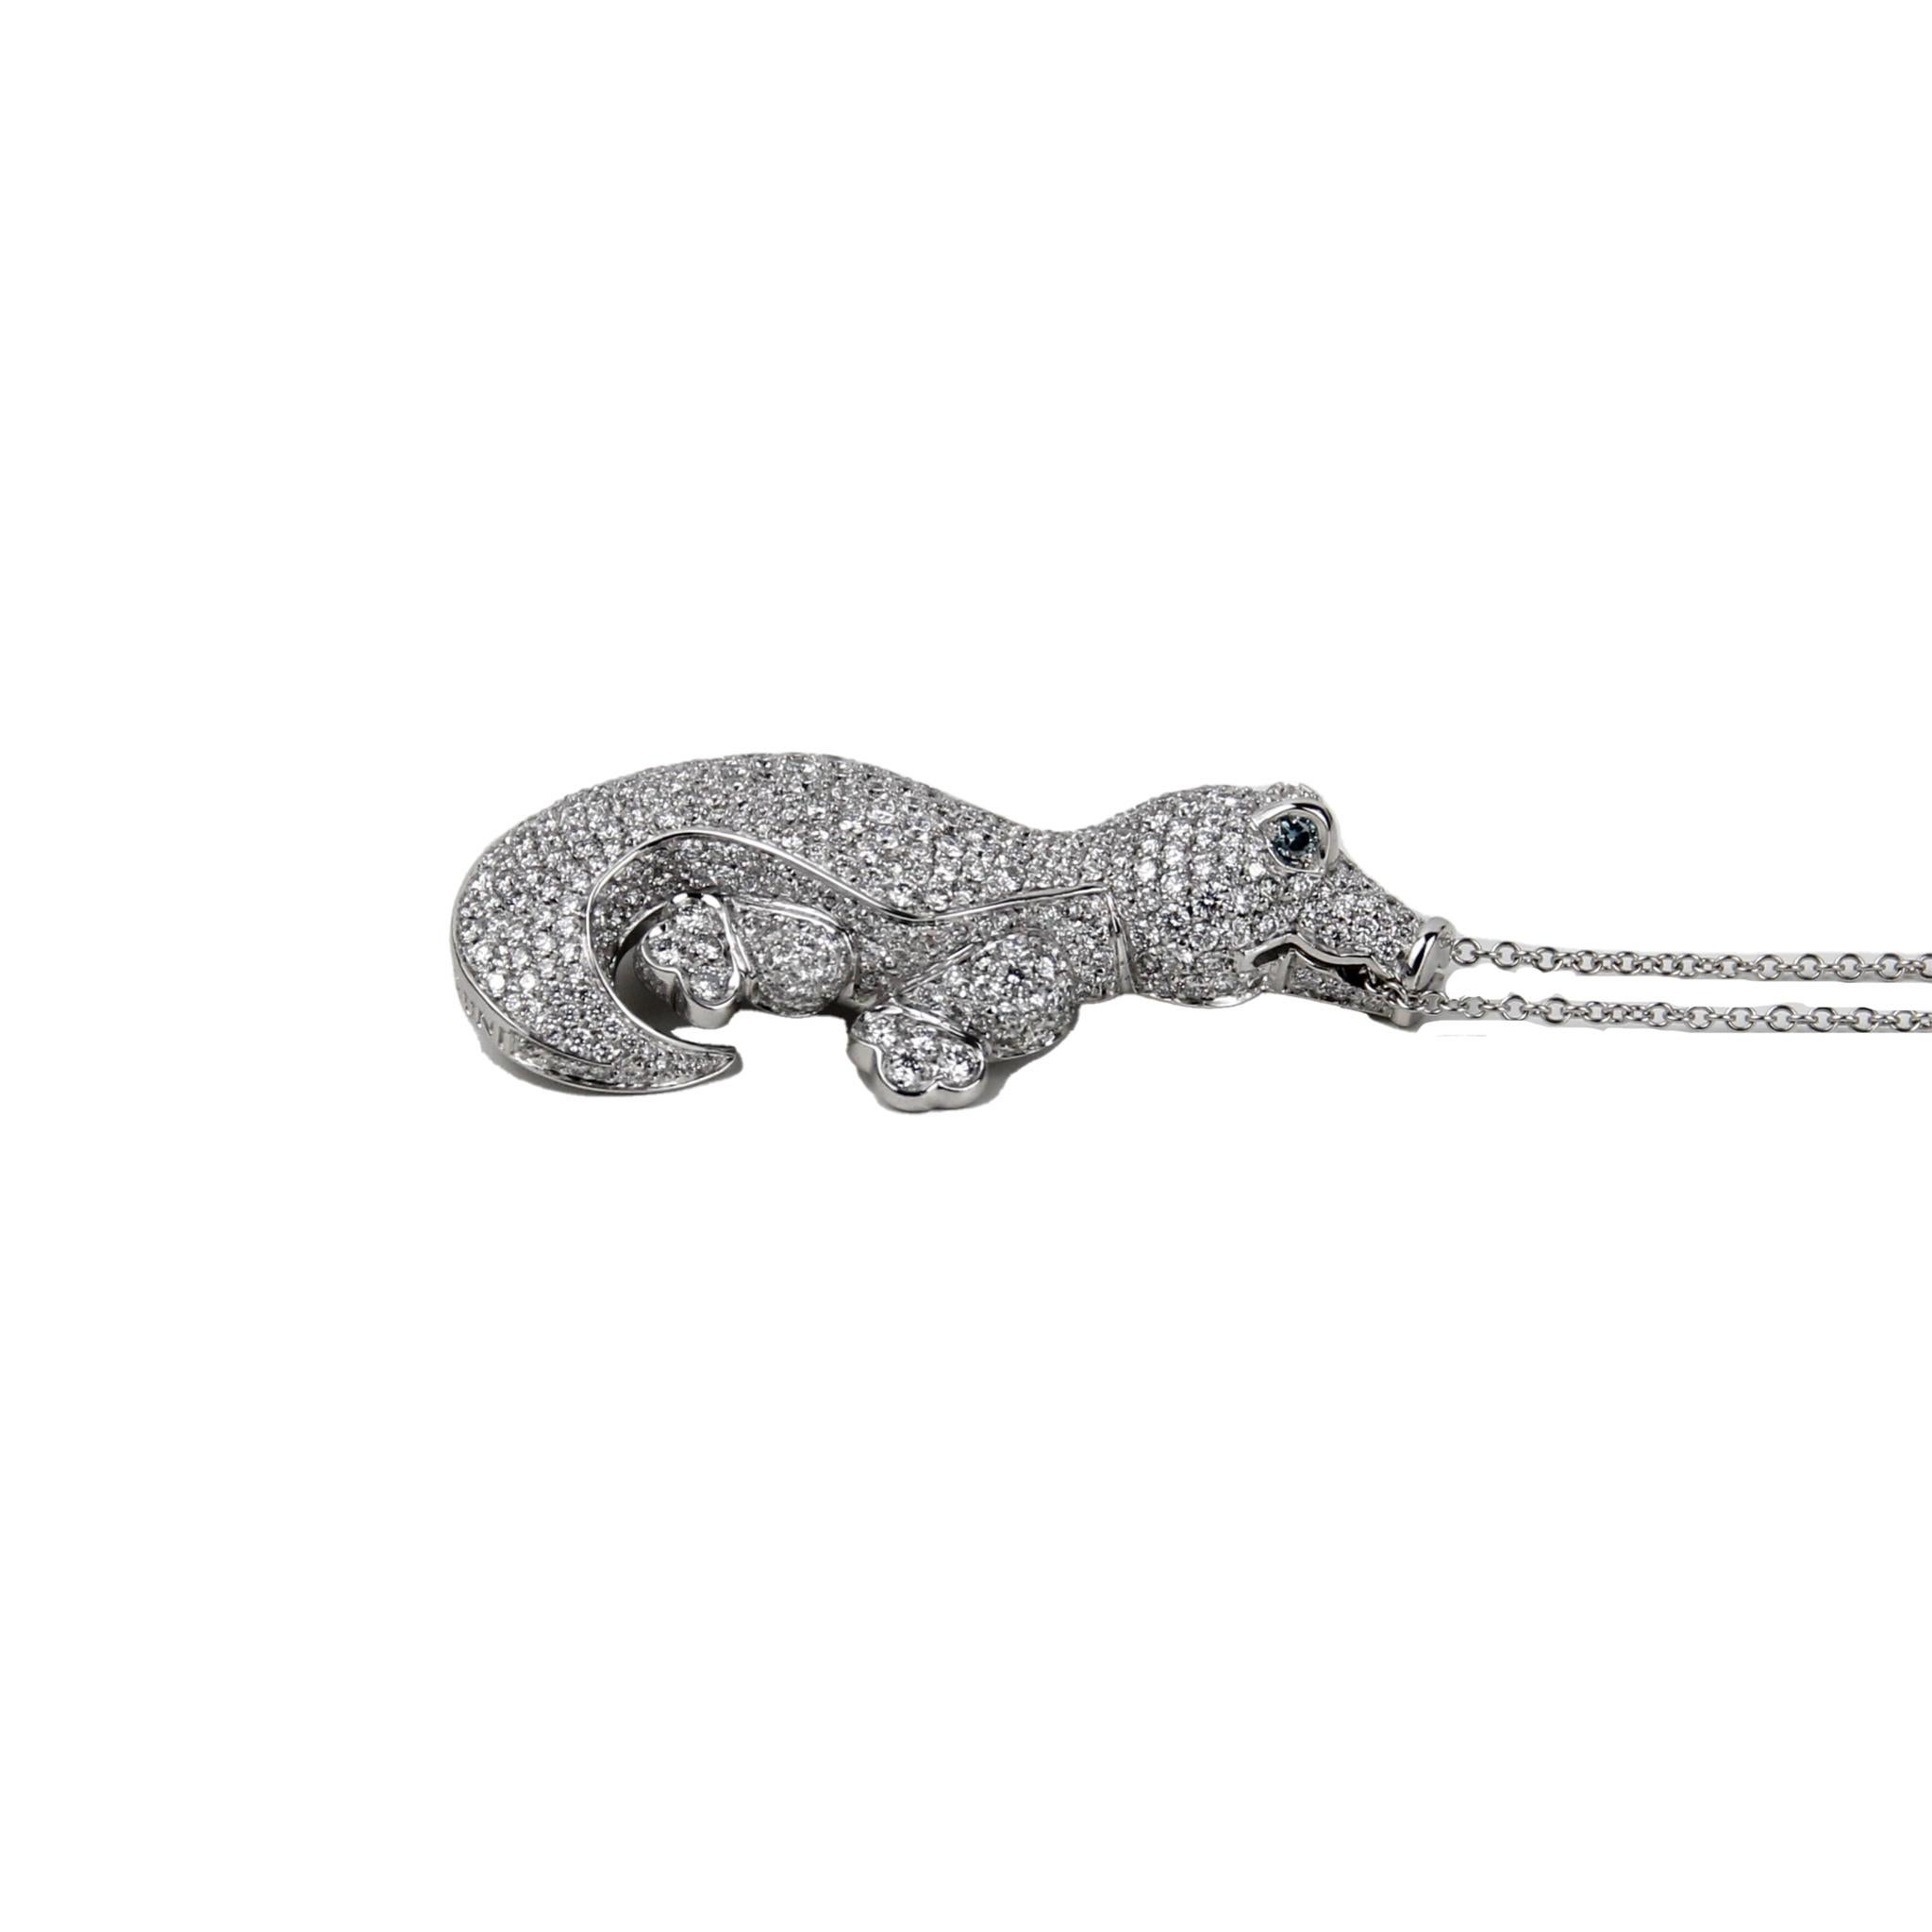 Pasquale Bruni Crocodile Necklace
18K White Gold 
Diamond: 7.14ctw